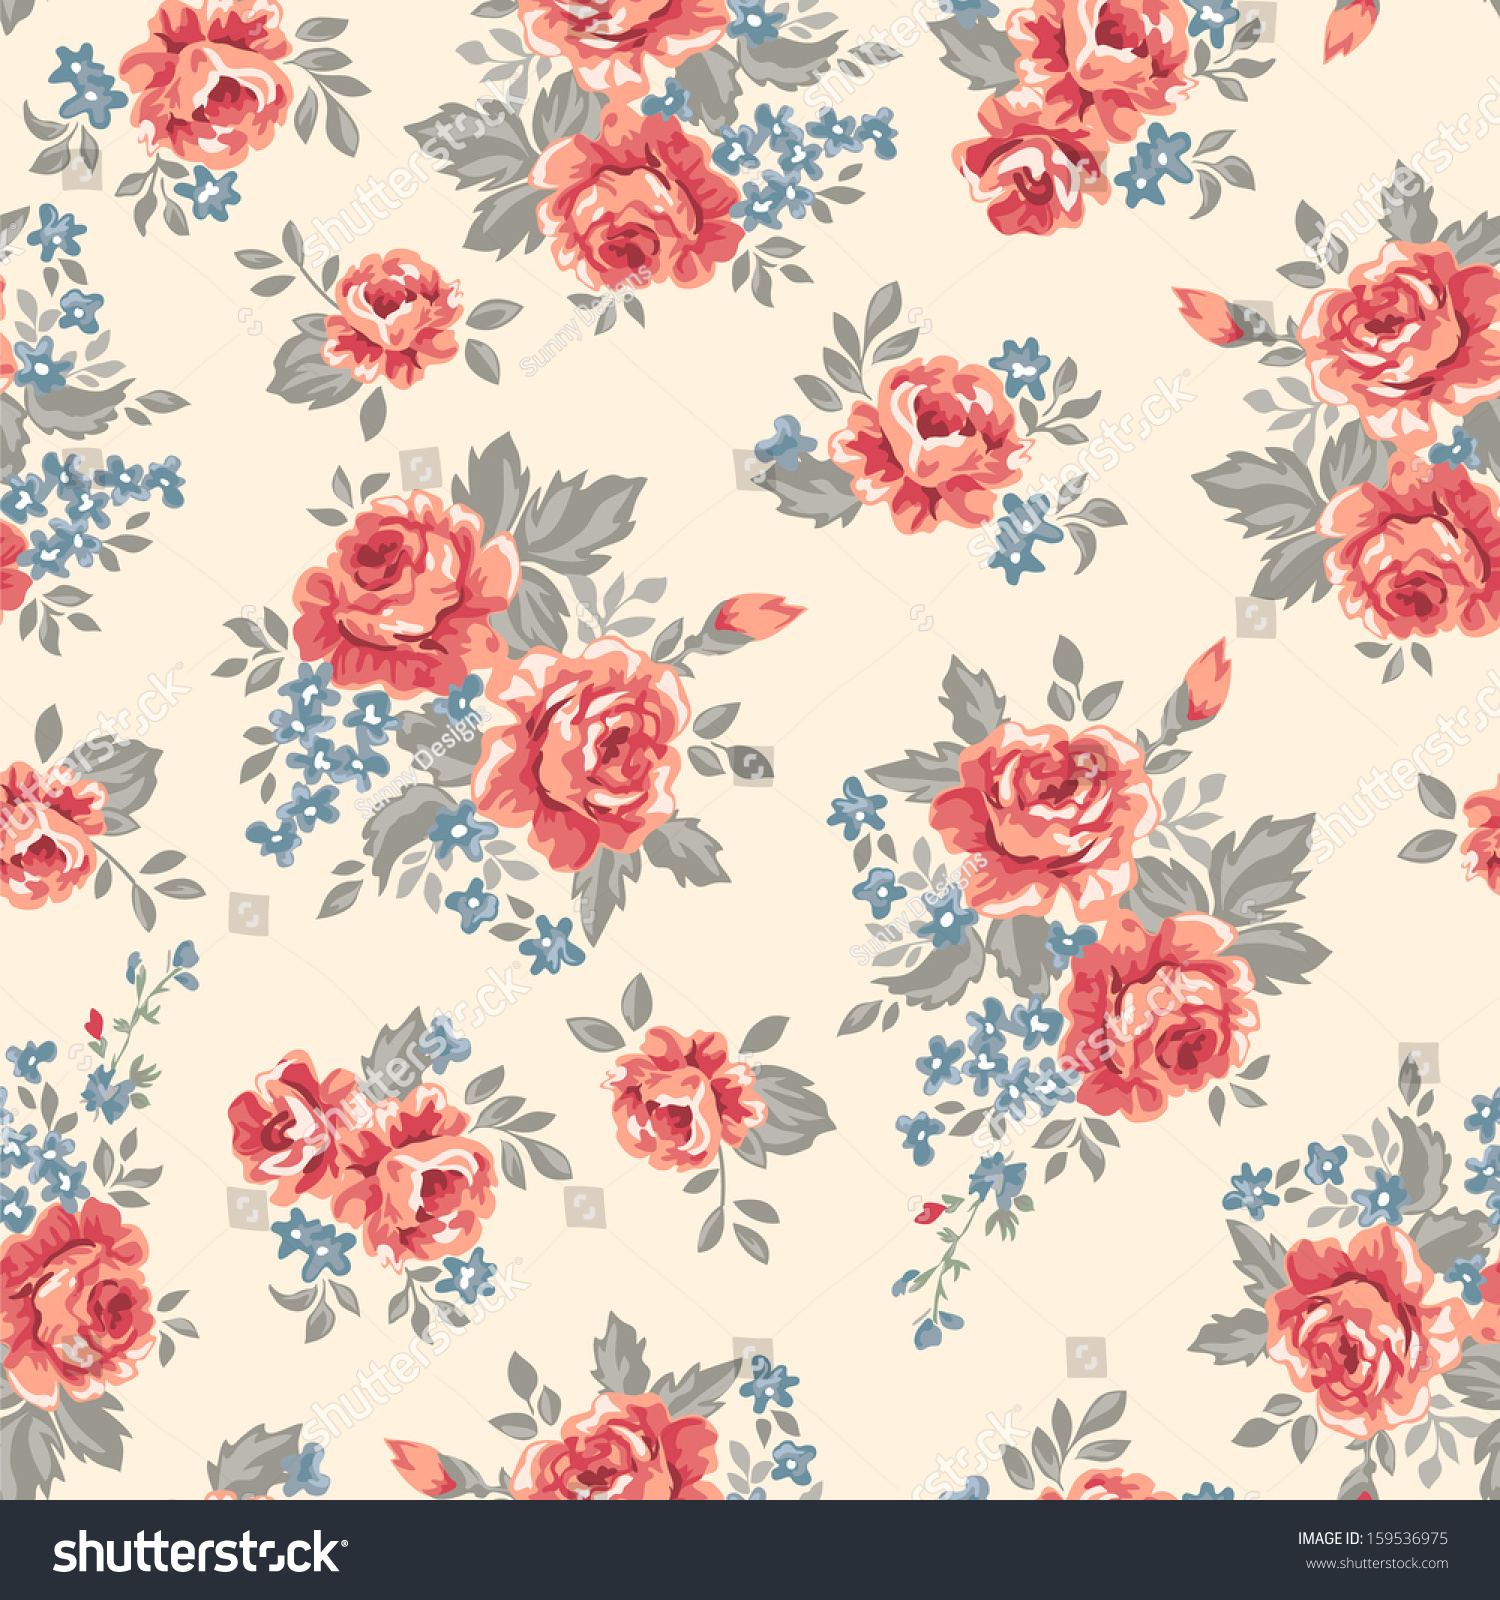 Vintage Roses ~ Seamless Vector Background - 159536975 : Shutterstock